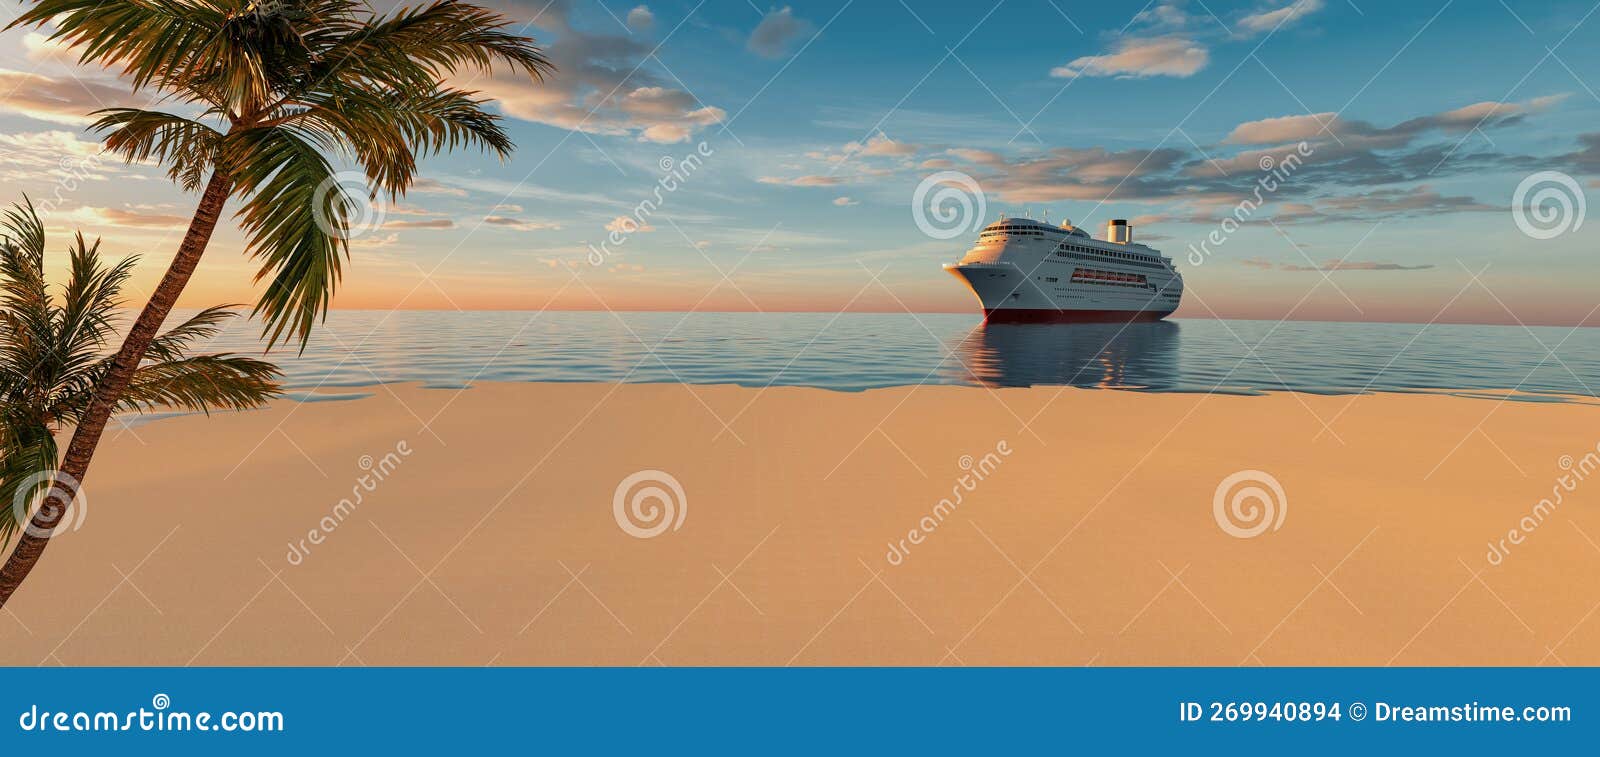 a large white cruise ship sails through the sea